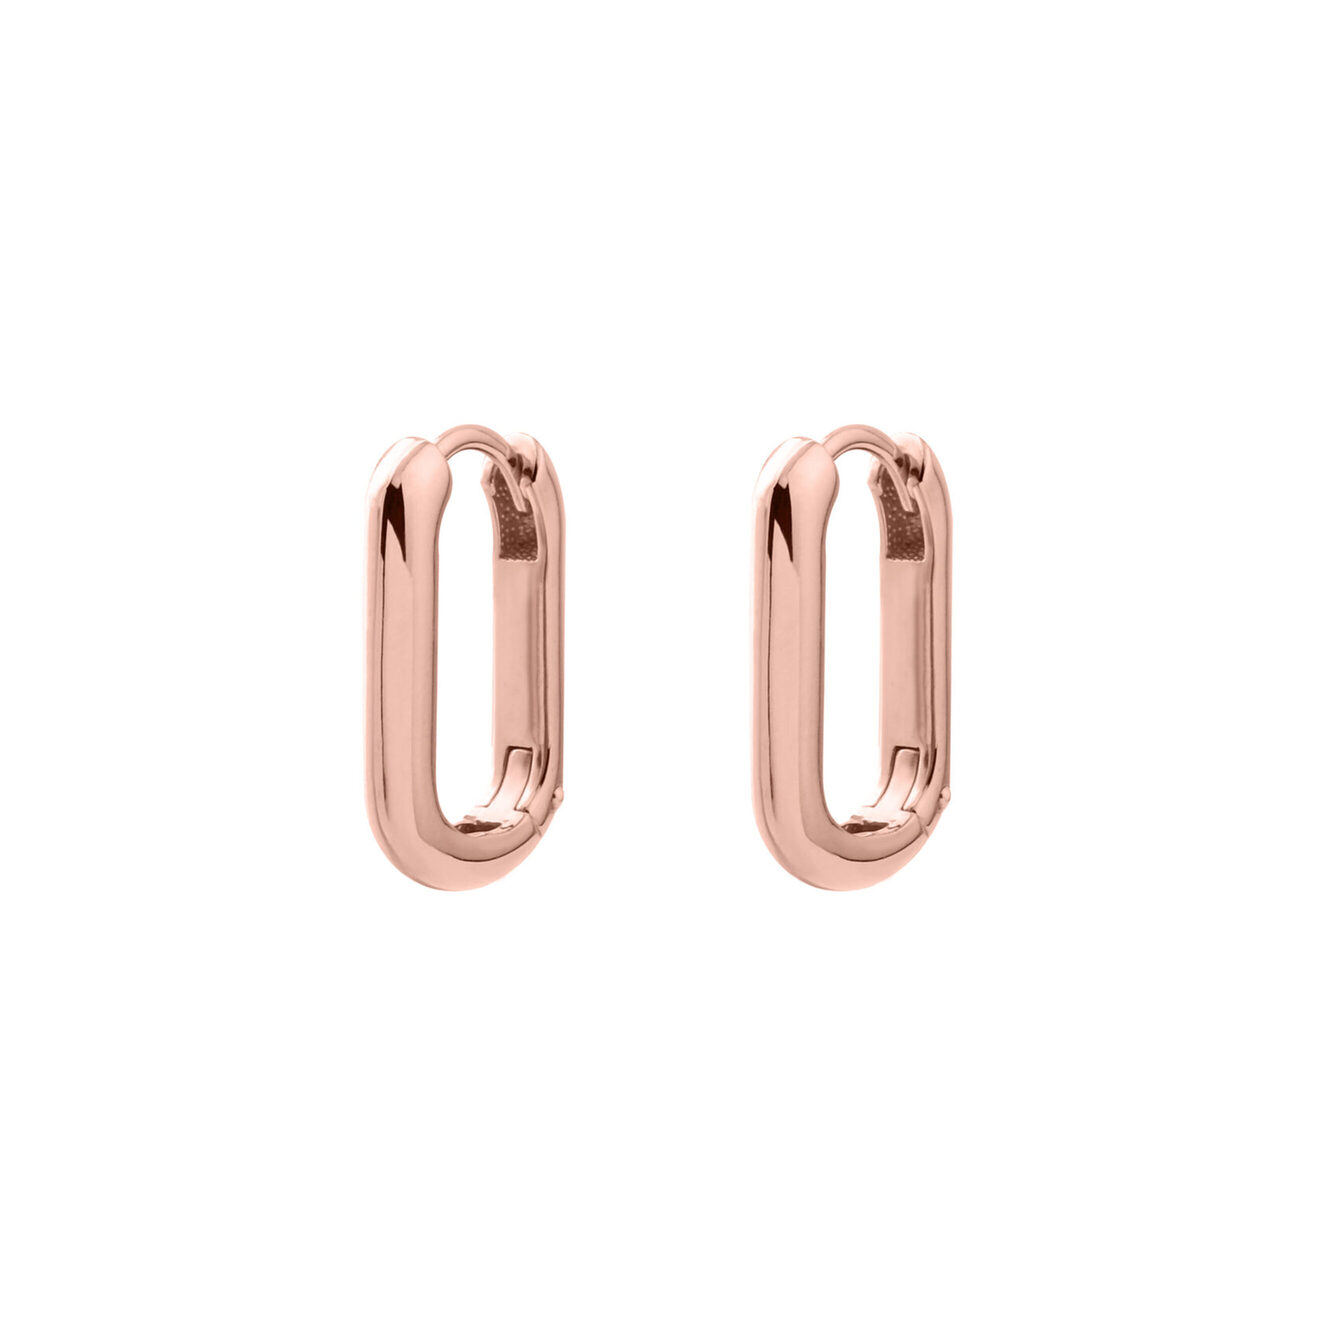 LUTA Jewelry Серьги-кольца из серебра с розовой позолотой luta jewelry серьги кольца из серебра с розовой позолотой